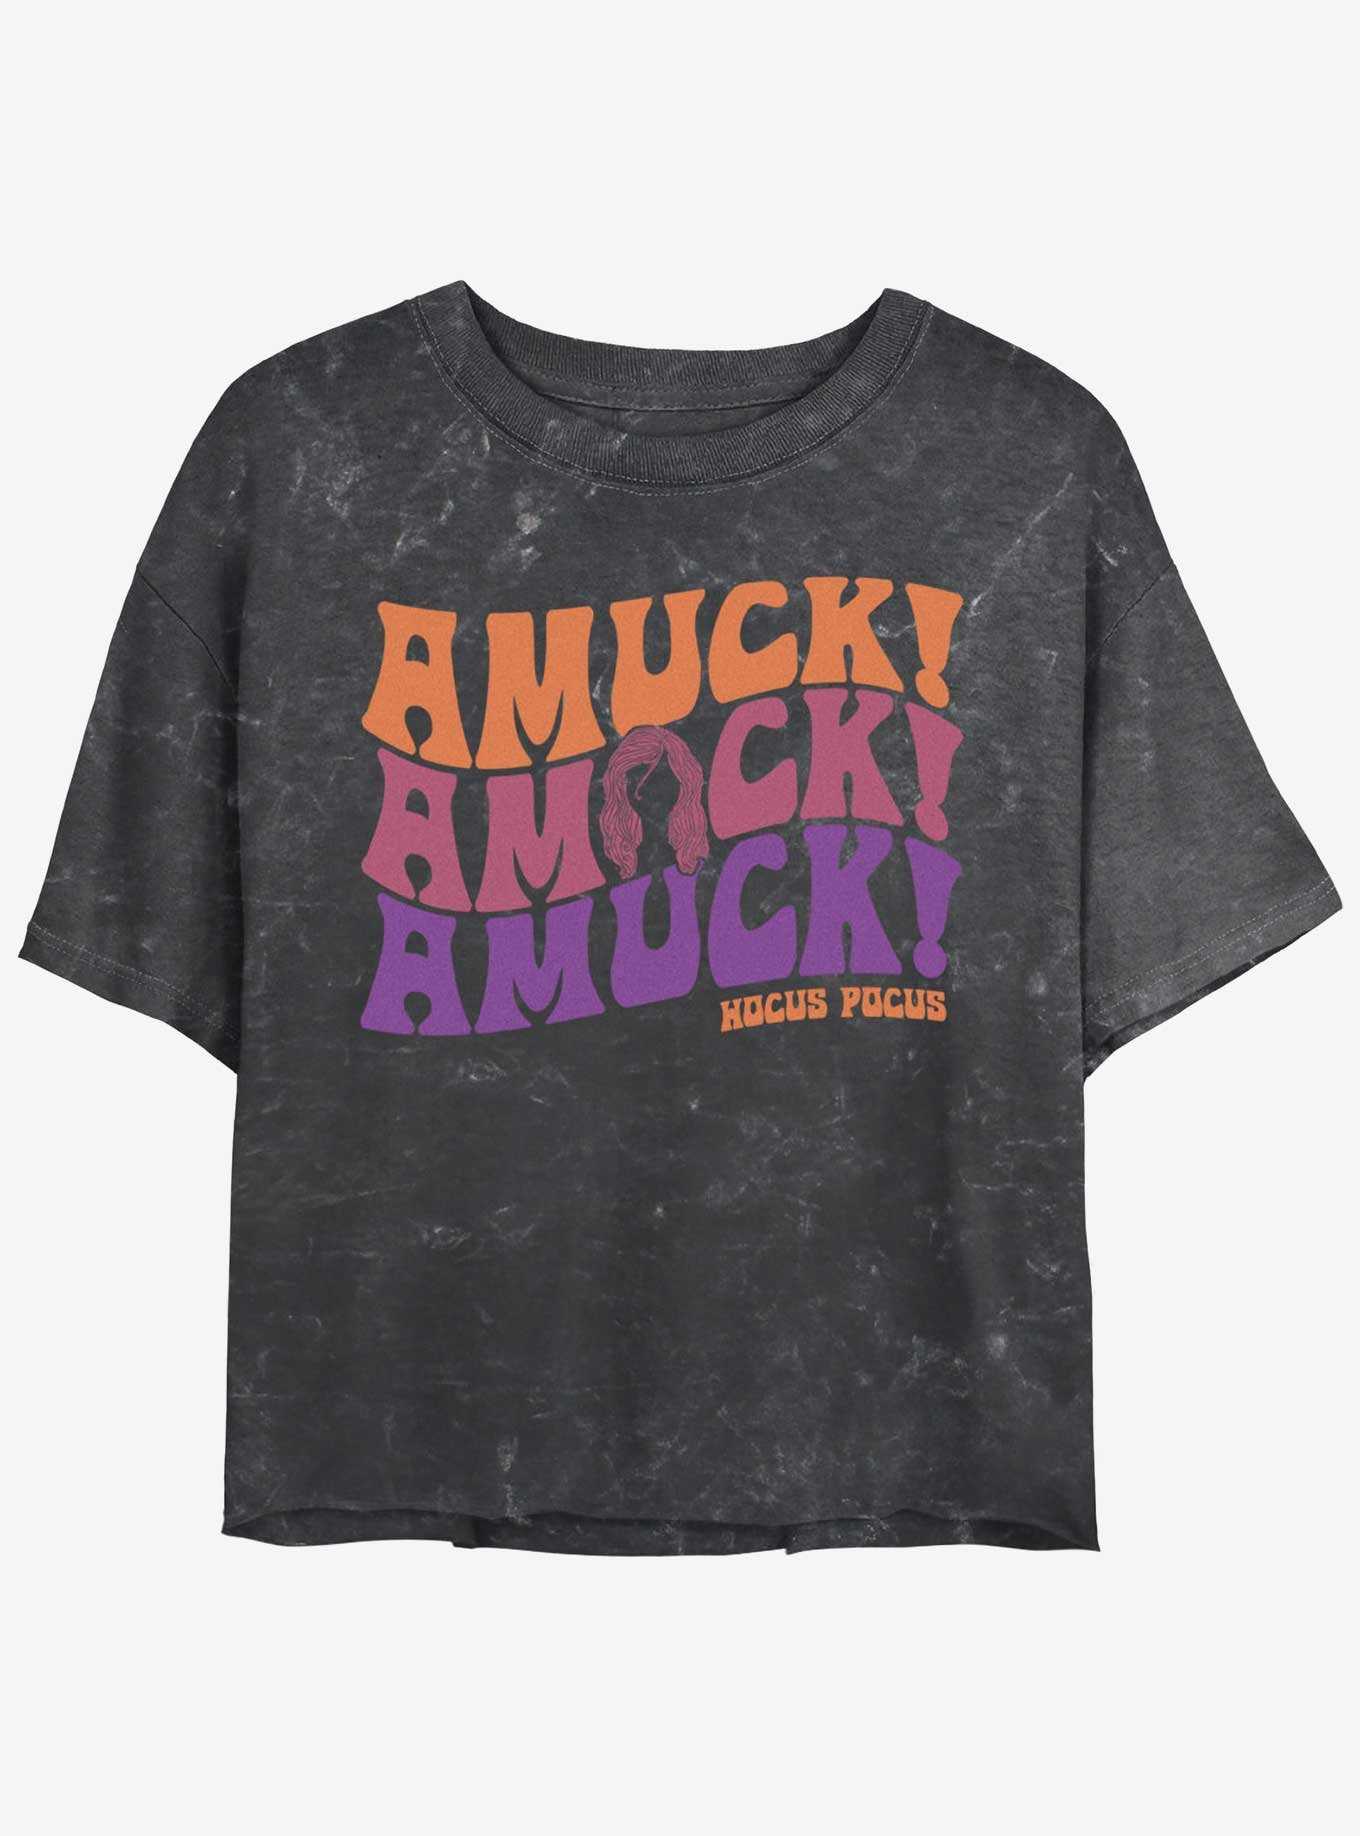 Disney Hocus Pocus Amuck, Amuck, Amuck! Mineral Wash Womens Crop T-Shirt, , hi-res